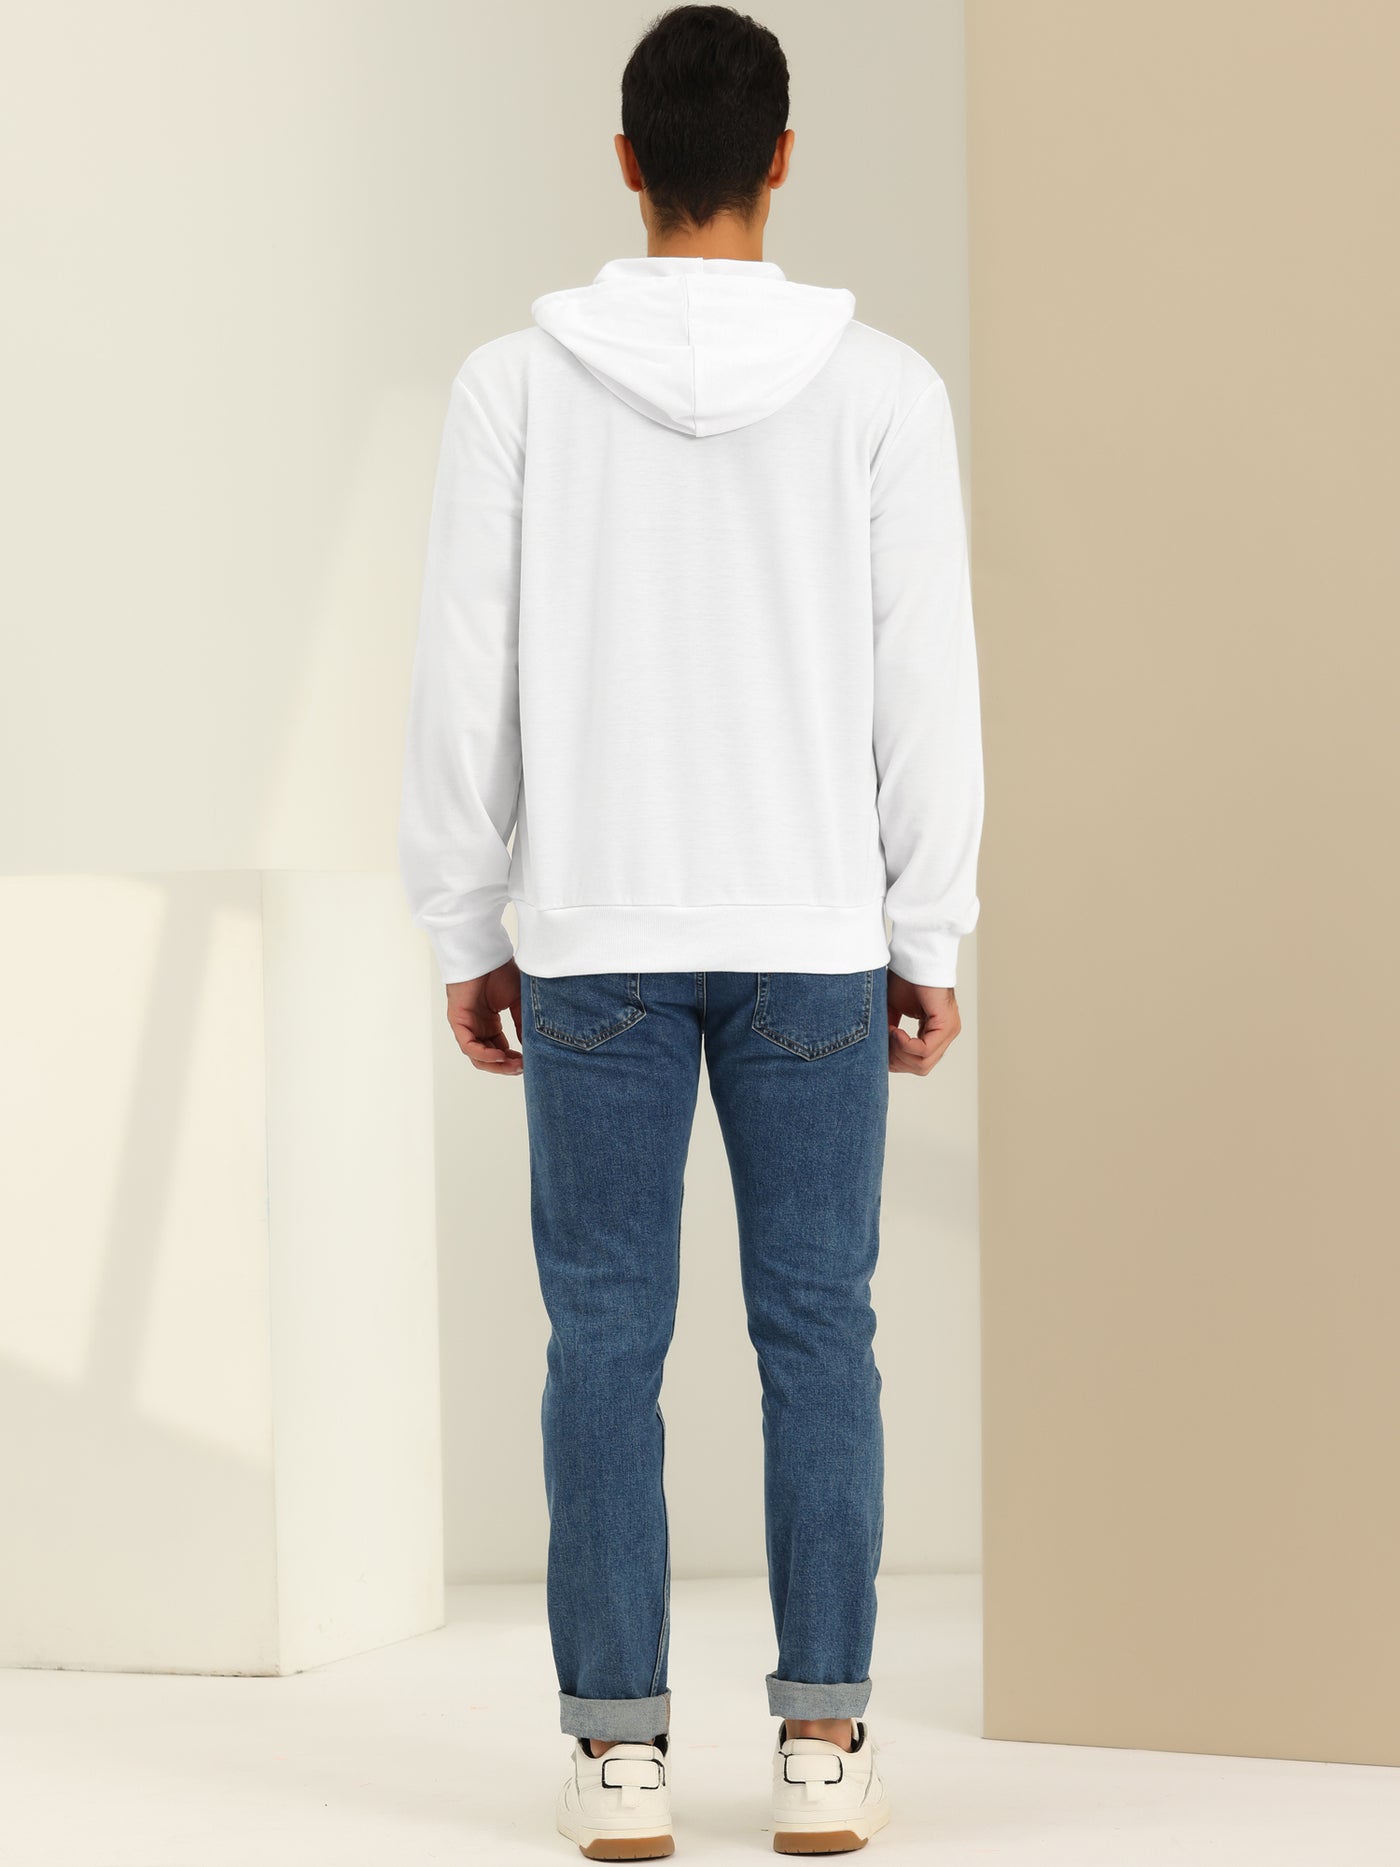 Bublédon Men's Hoodies Solid Color Zip Up Long Sleeves Knit Sweatshirt Jackets with Hood